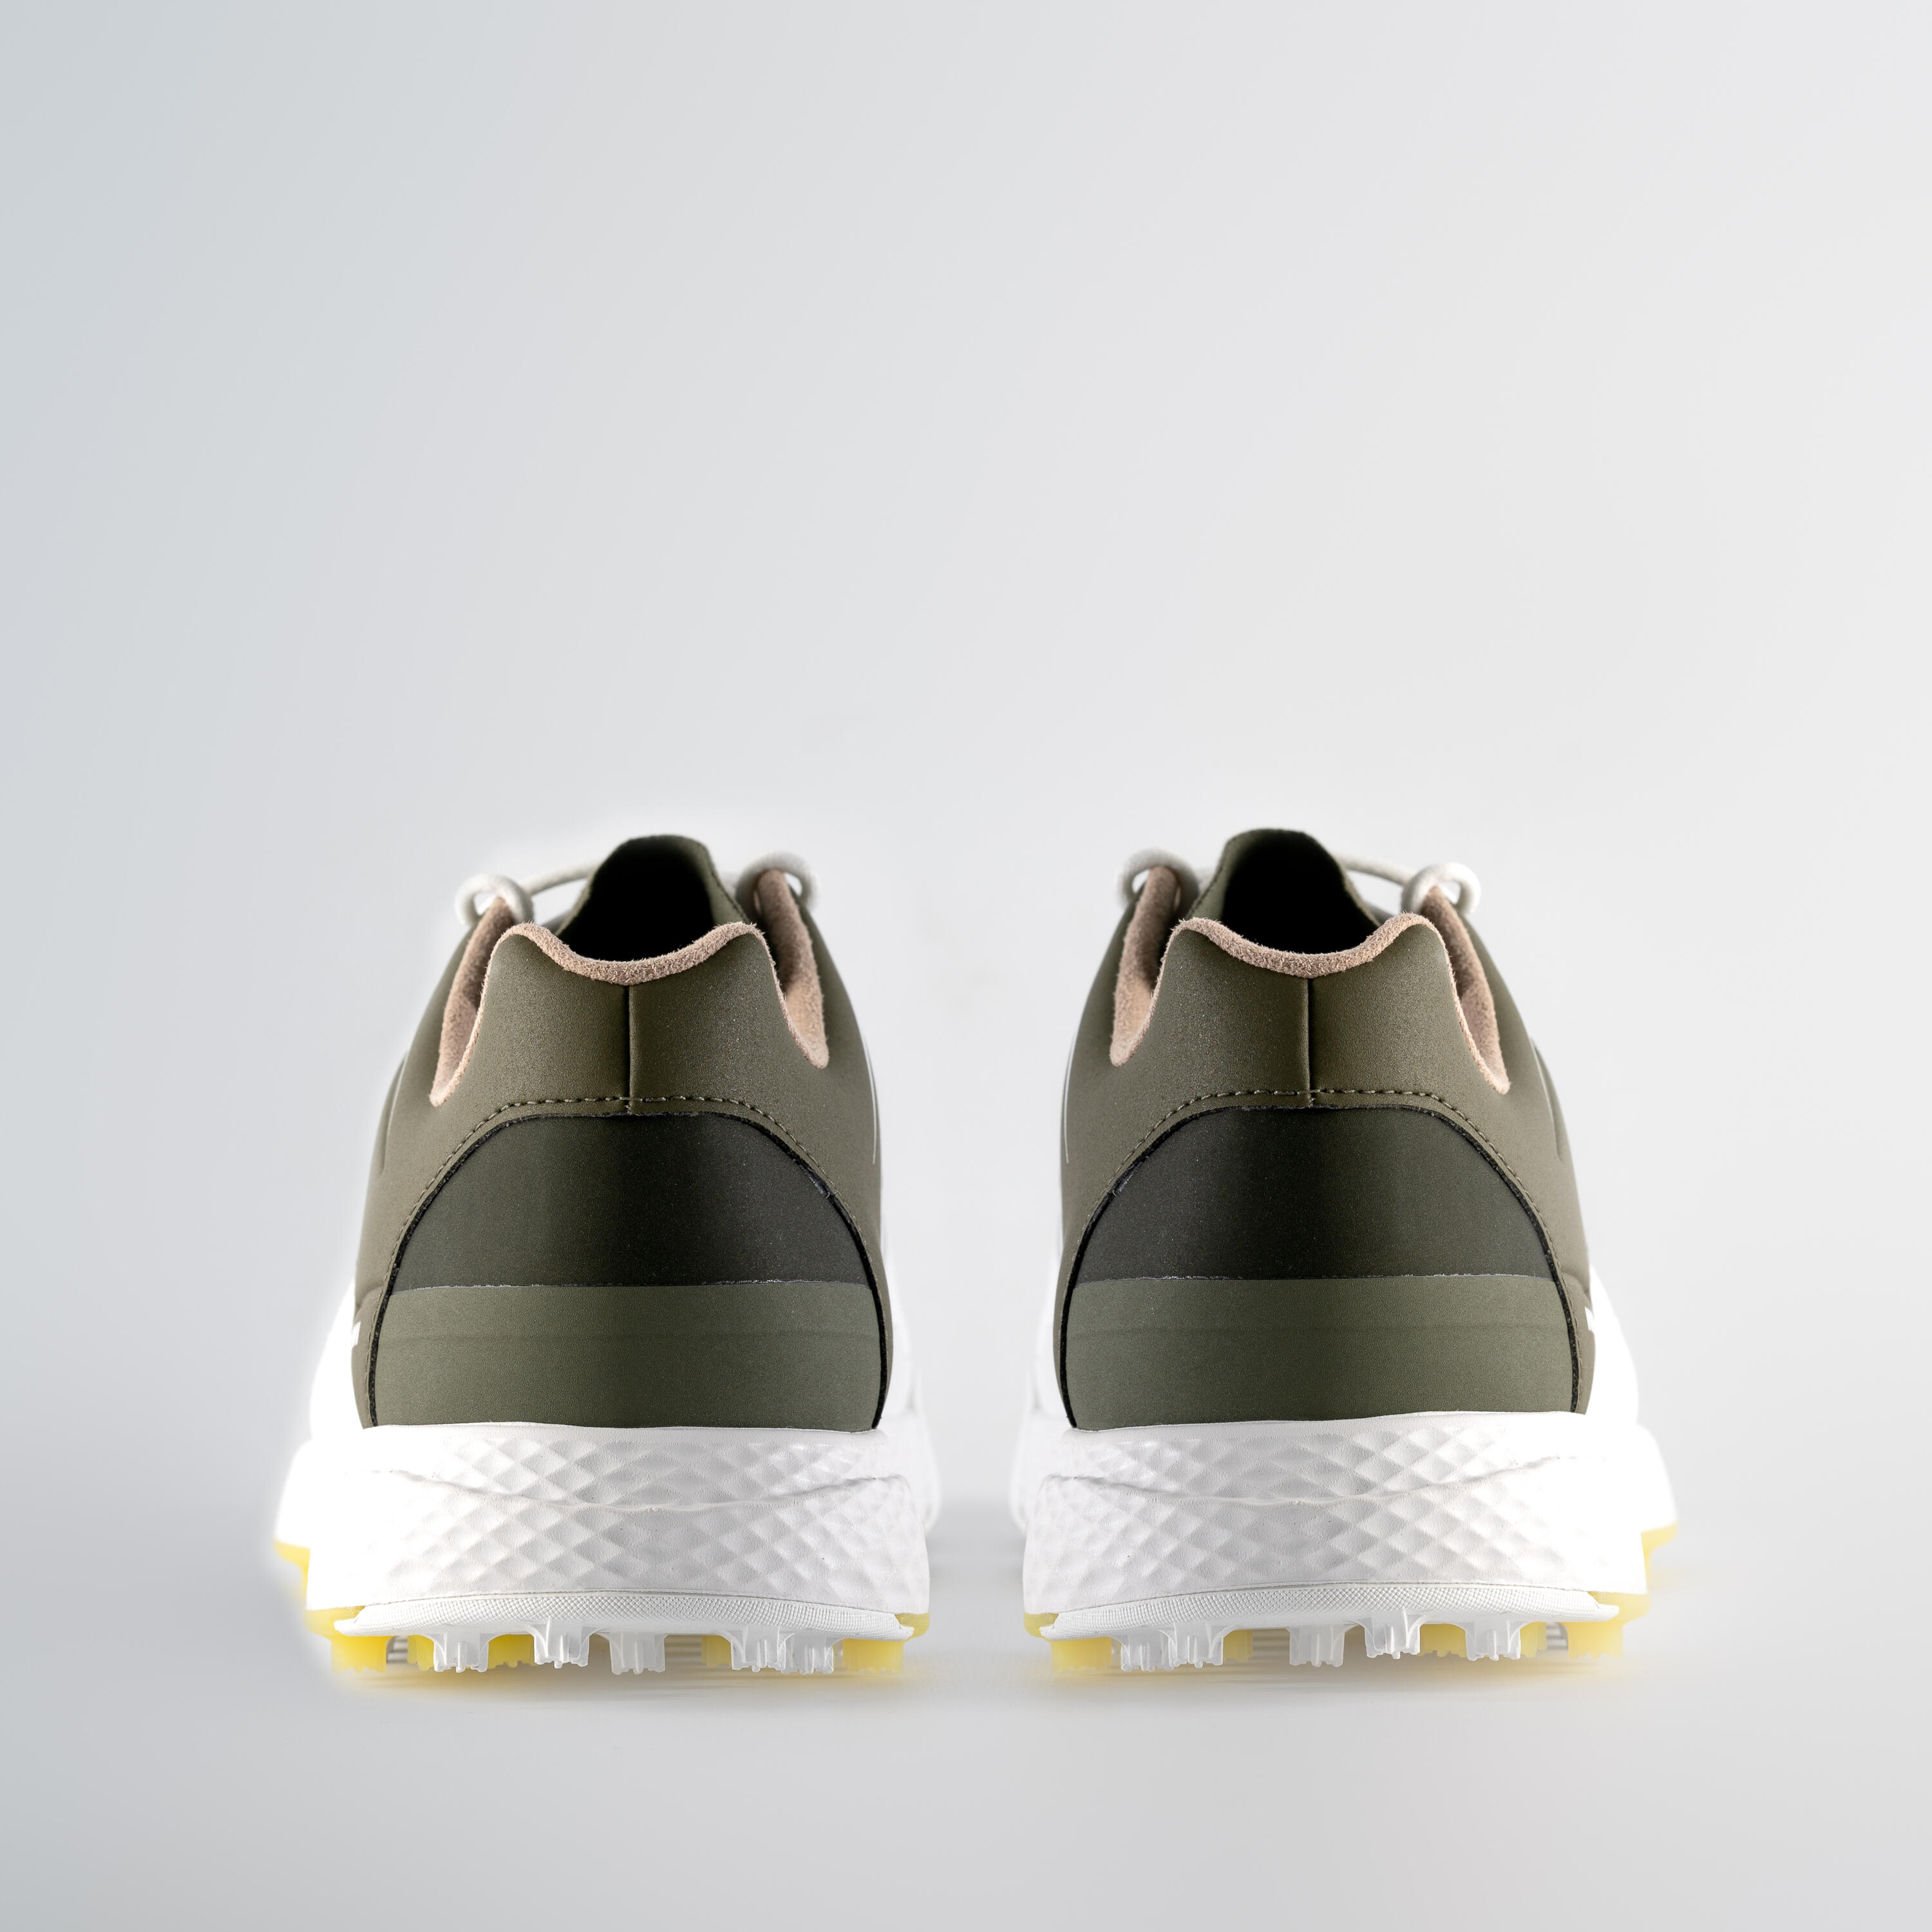 Men’s golf waterproof grip shoes - white and khaki 5/7